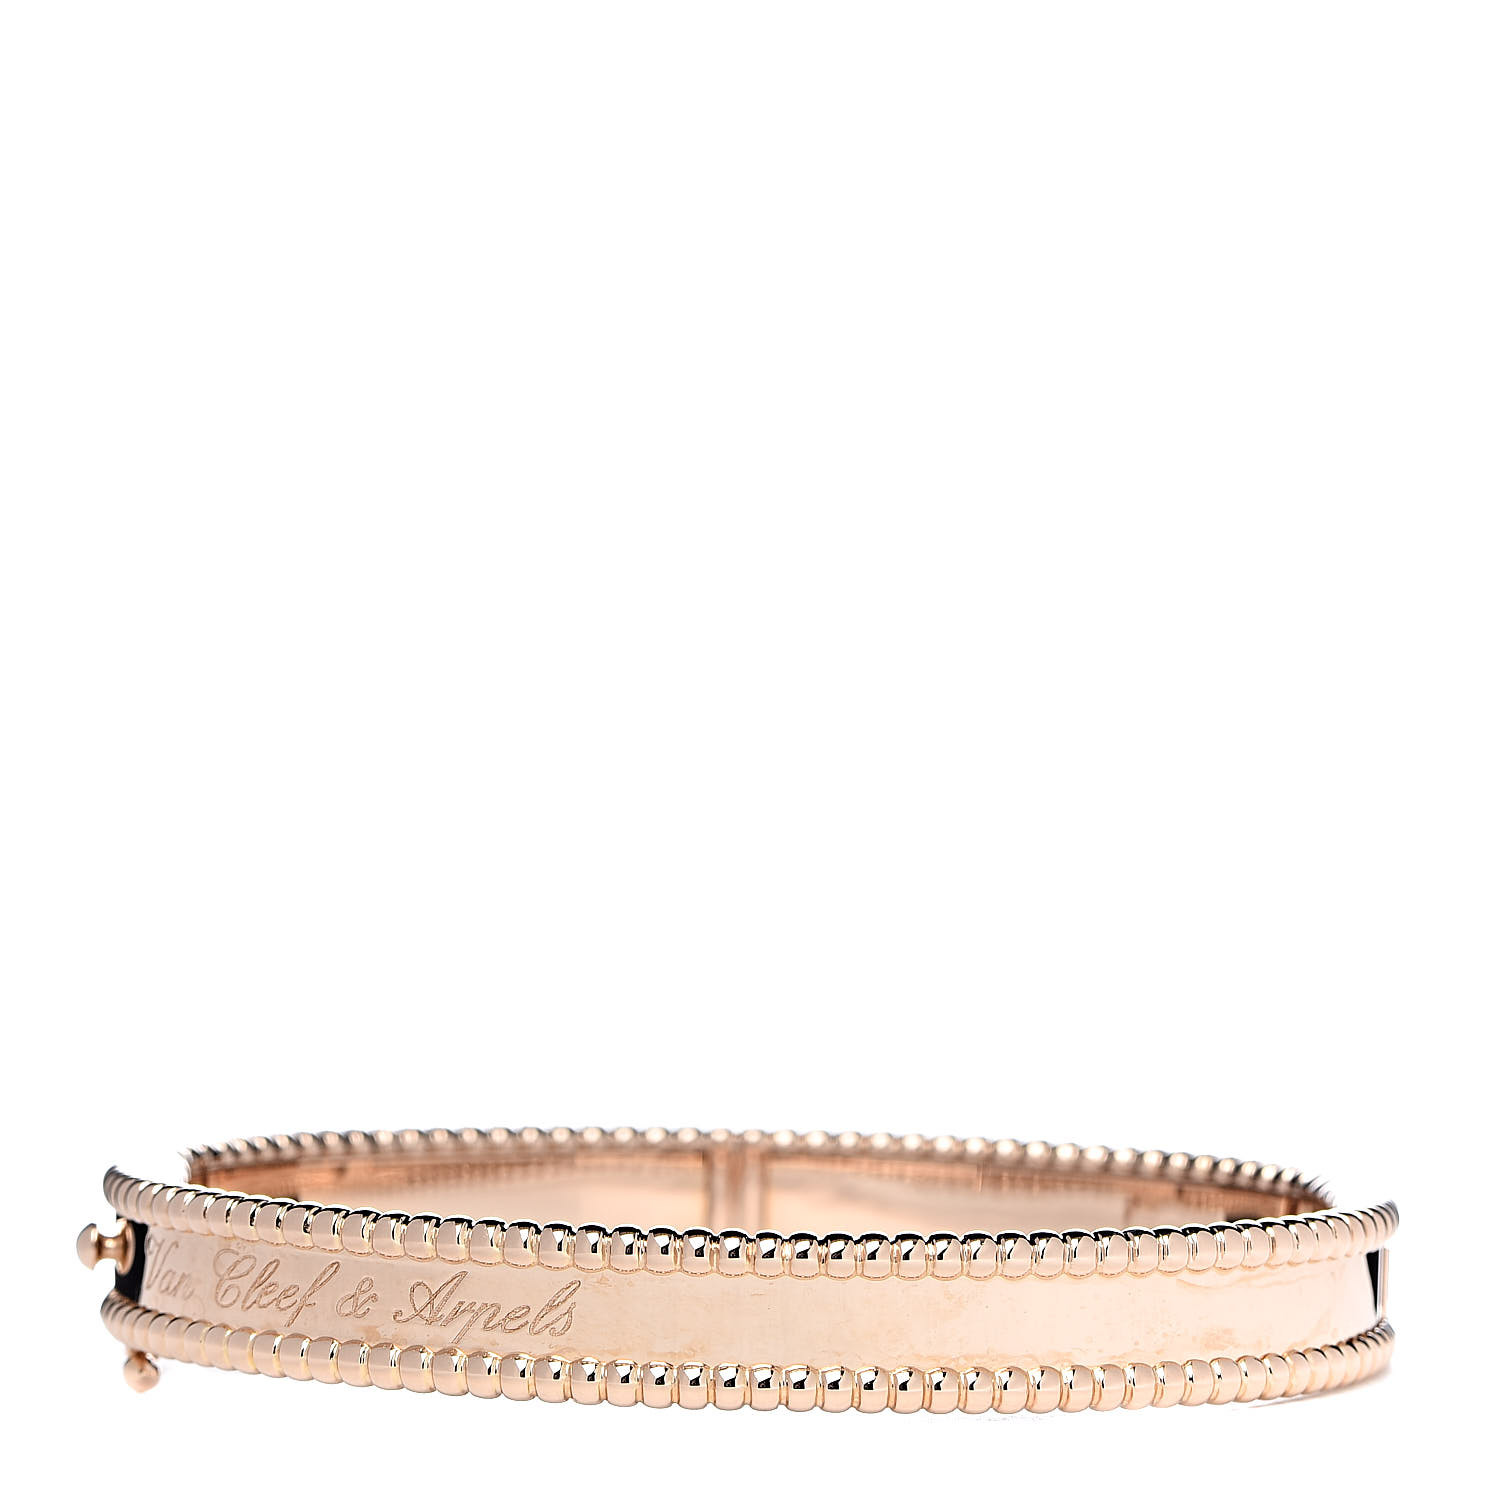 VAN CLEEF & ARPELS 18K Rose Gold Perlee Signature Bangle Bracelet S 510351